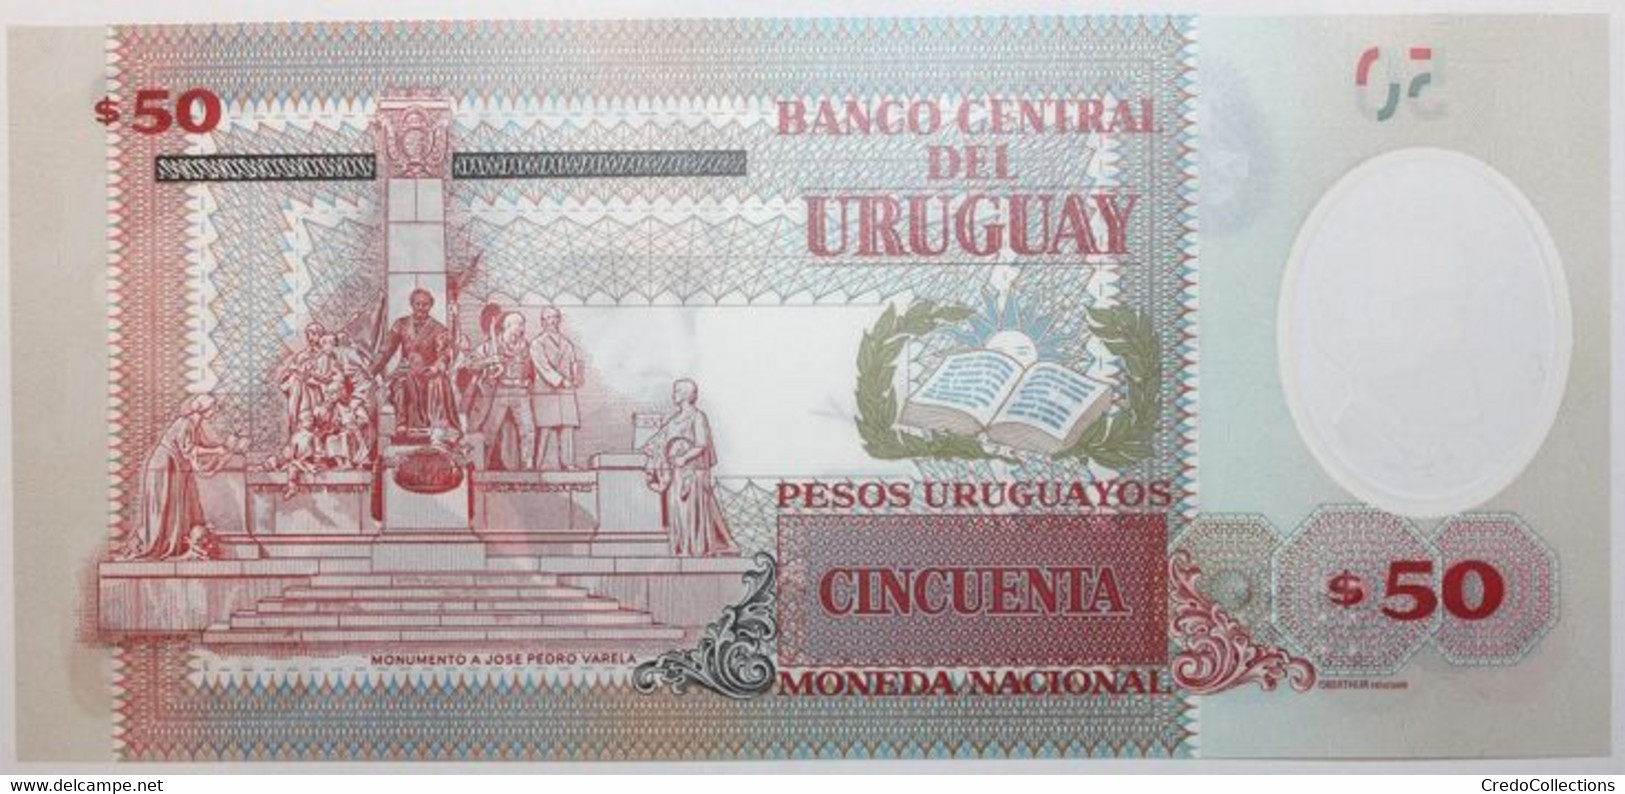 Uruguay - 50 Pesos Uruguayos - 2020 - PICK 102a - NEUF - Uruguay